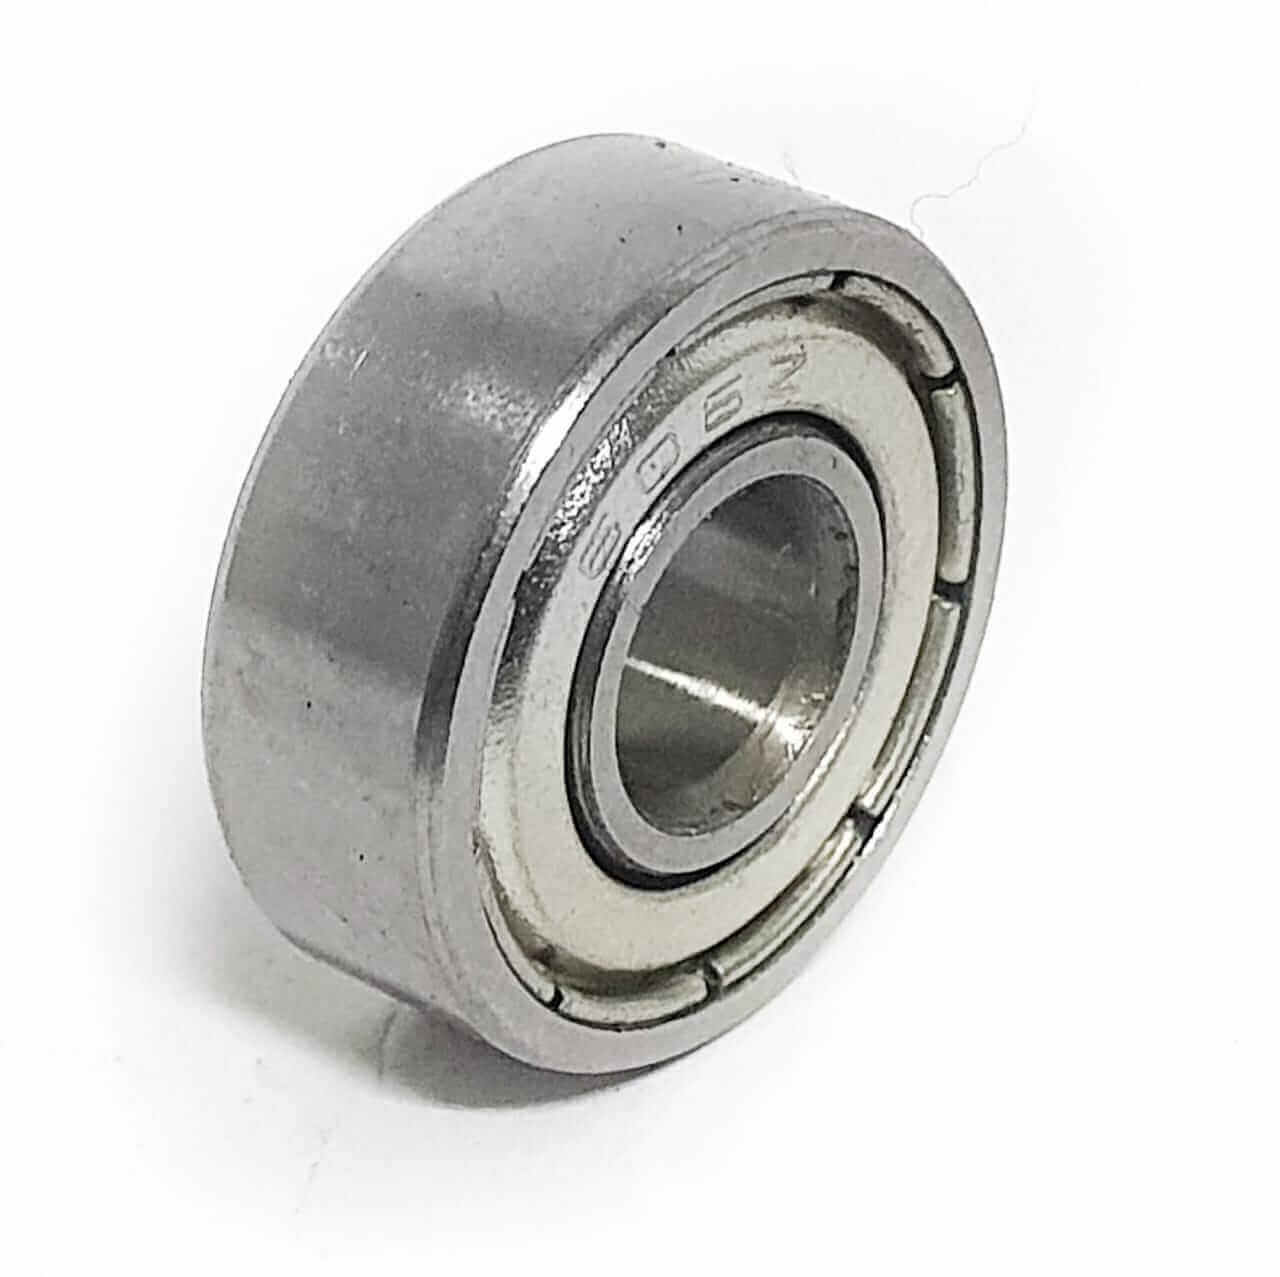 ▷ Deep groove ball bearing 606-ZZ/C3 -  6X17X6 mm Steel seal